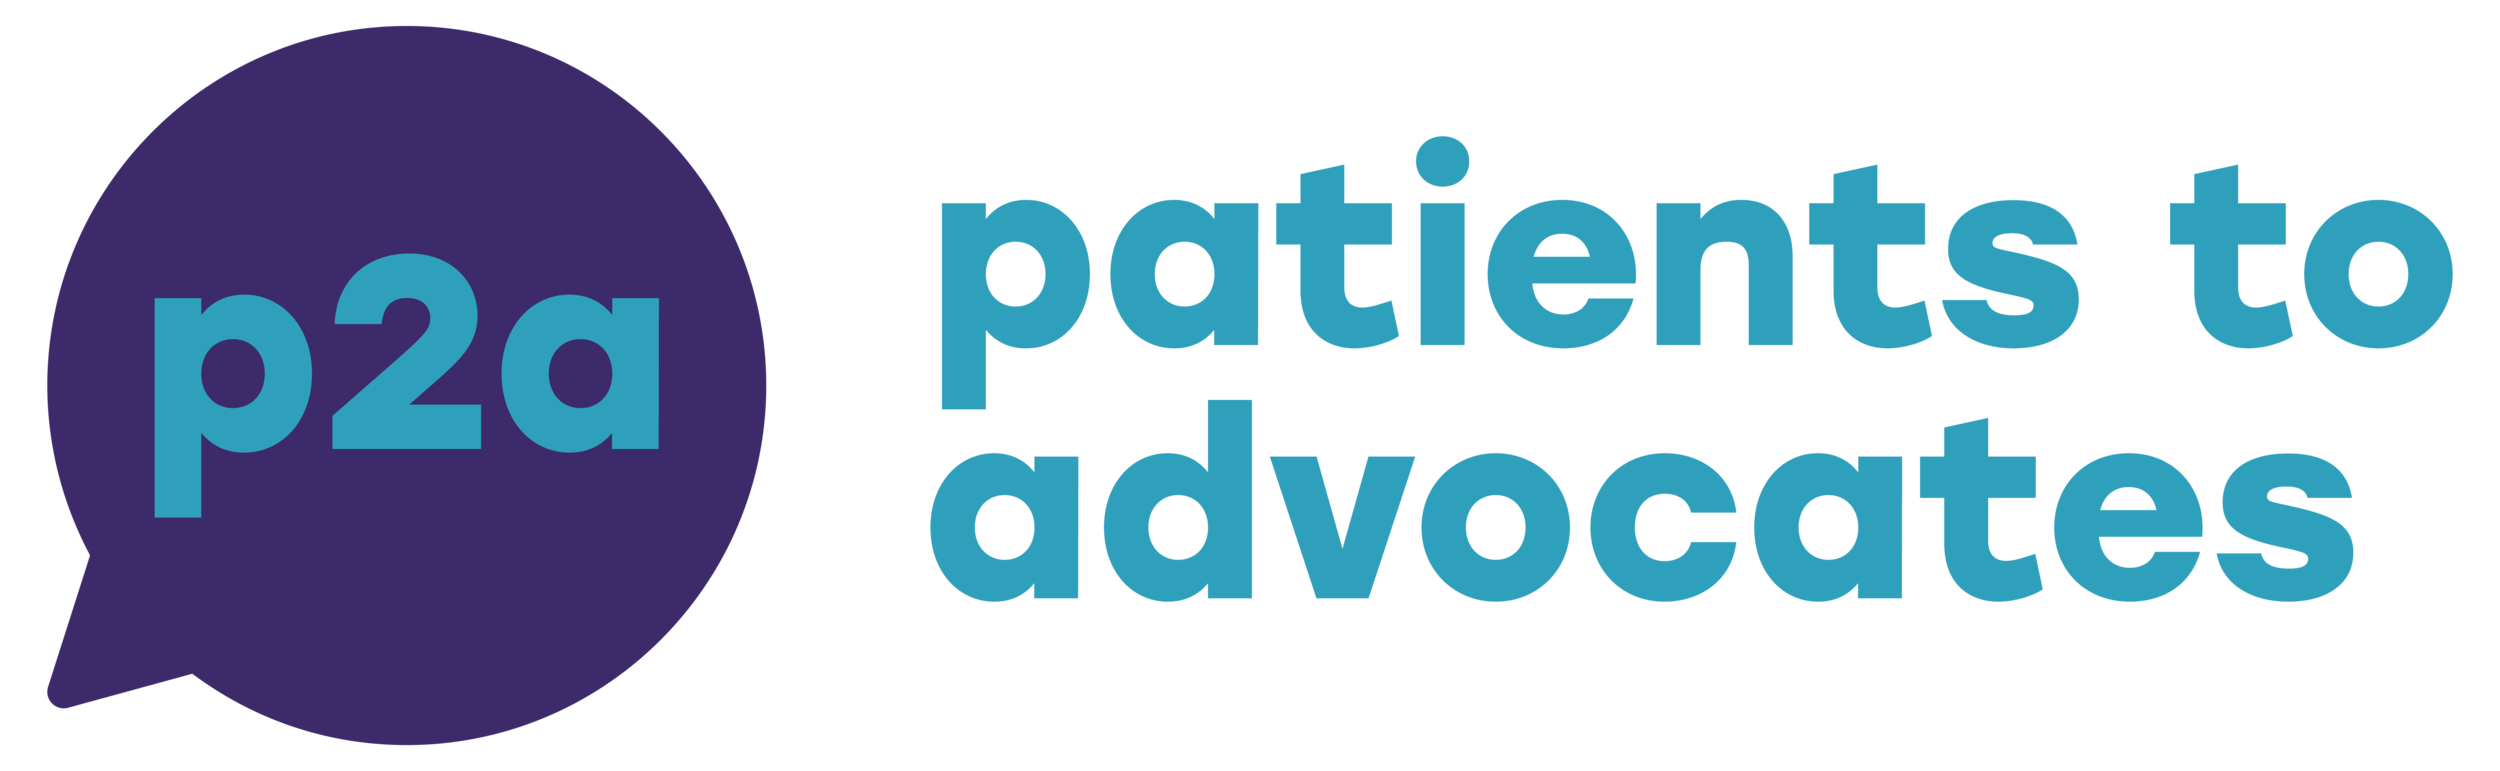 Patients to Advocates